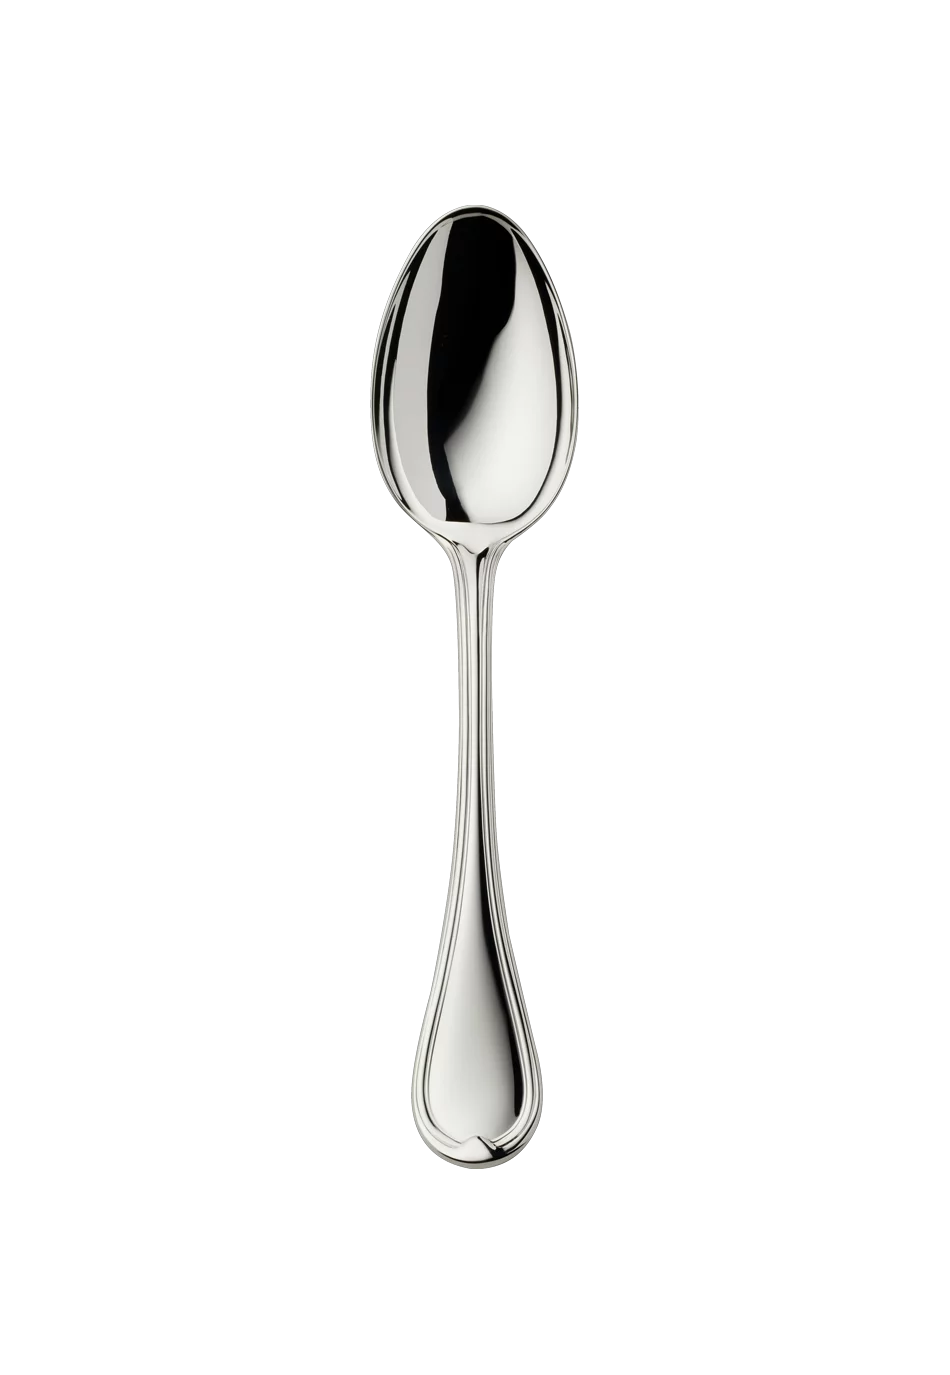 Classic-Faden Menu Spoon (150g massive silverplated)